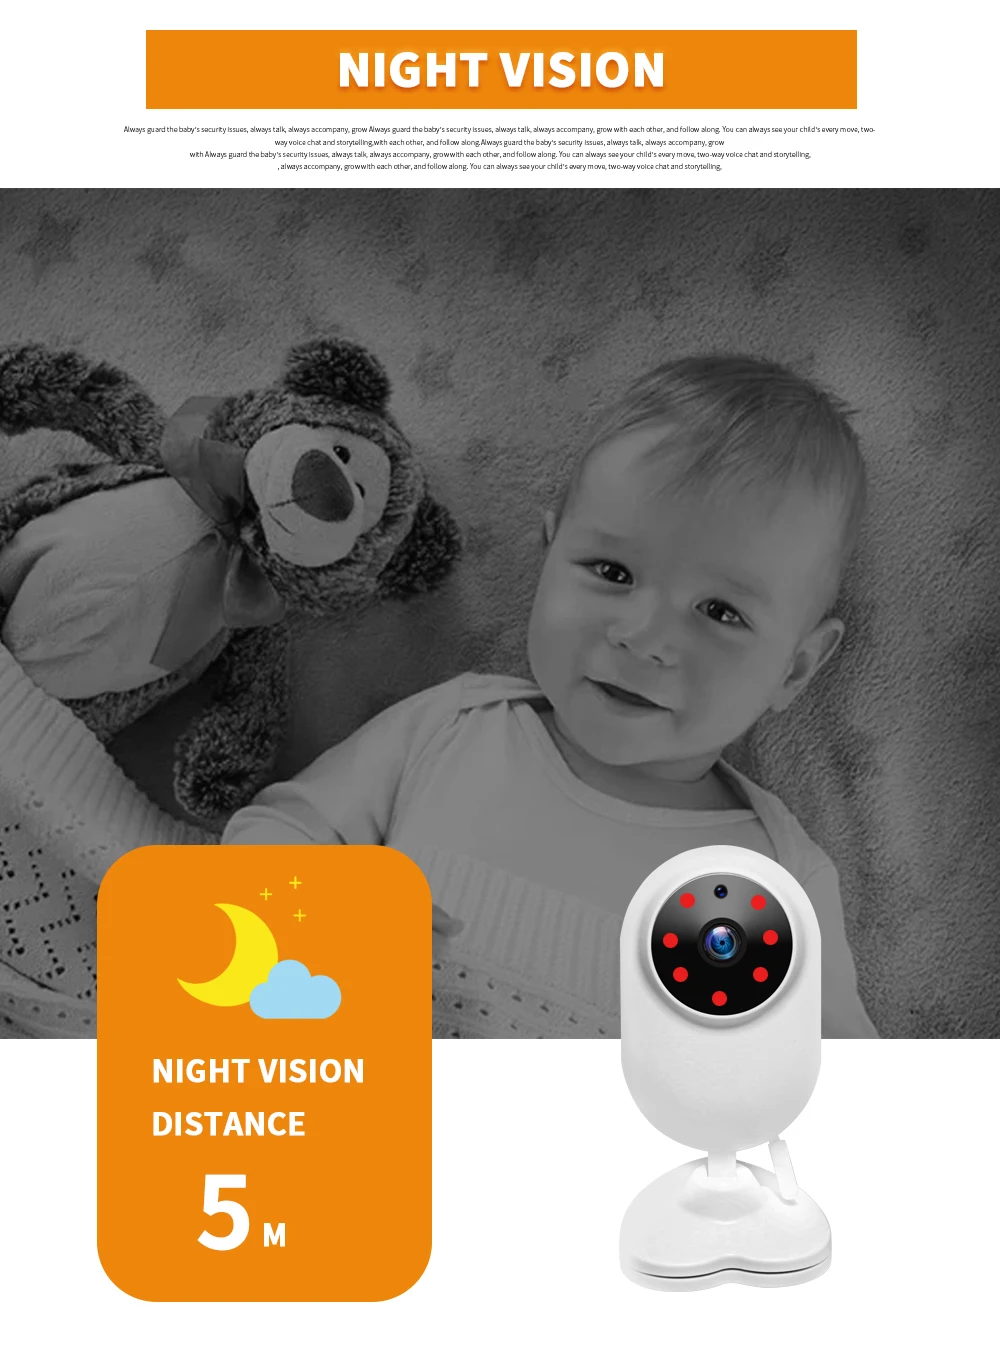 inqmega wireless video babyphone baby monitor 4 3 inch camera night vision temperature monitoring baba eletronica babyfoon free global shipping